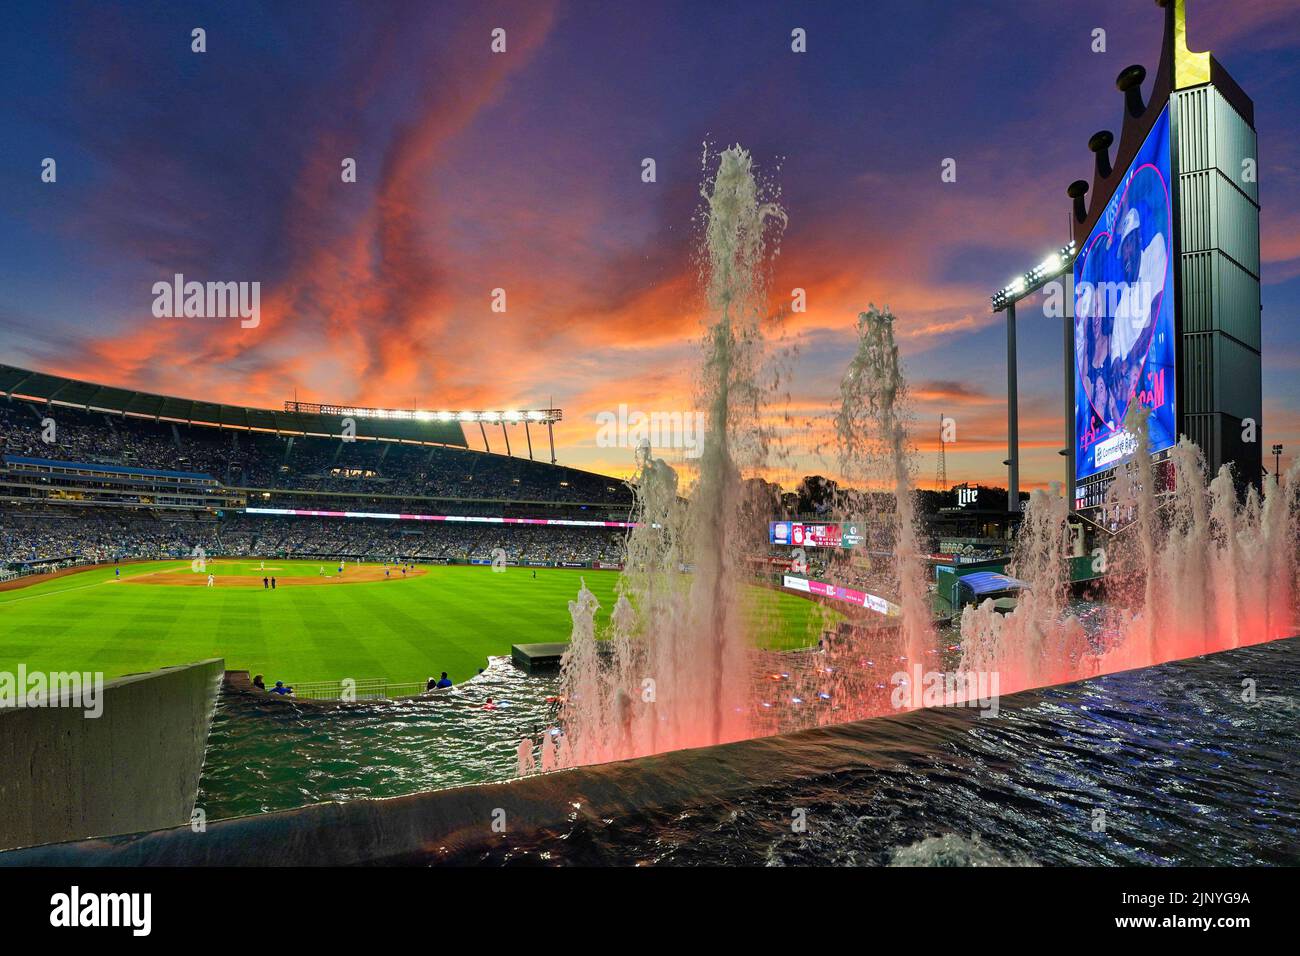 AUG 13, 2022: City of fountains on display at Kauffman Stadium Kansas City, Missouri. The Dodgers beat the Kansas City Royals 13-3 Jon Robichaud/CSM. Stock Photo